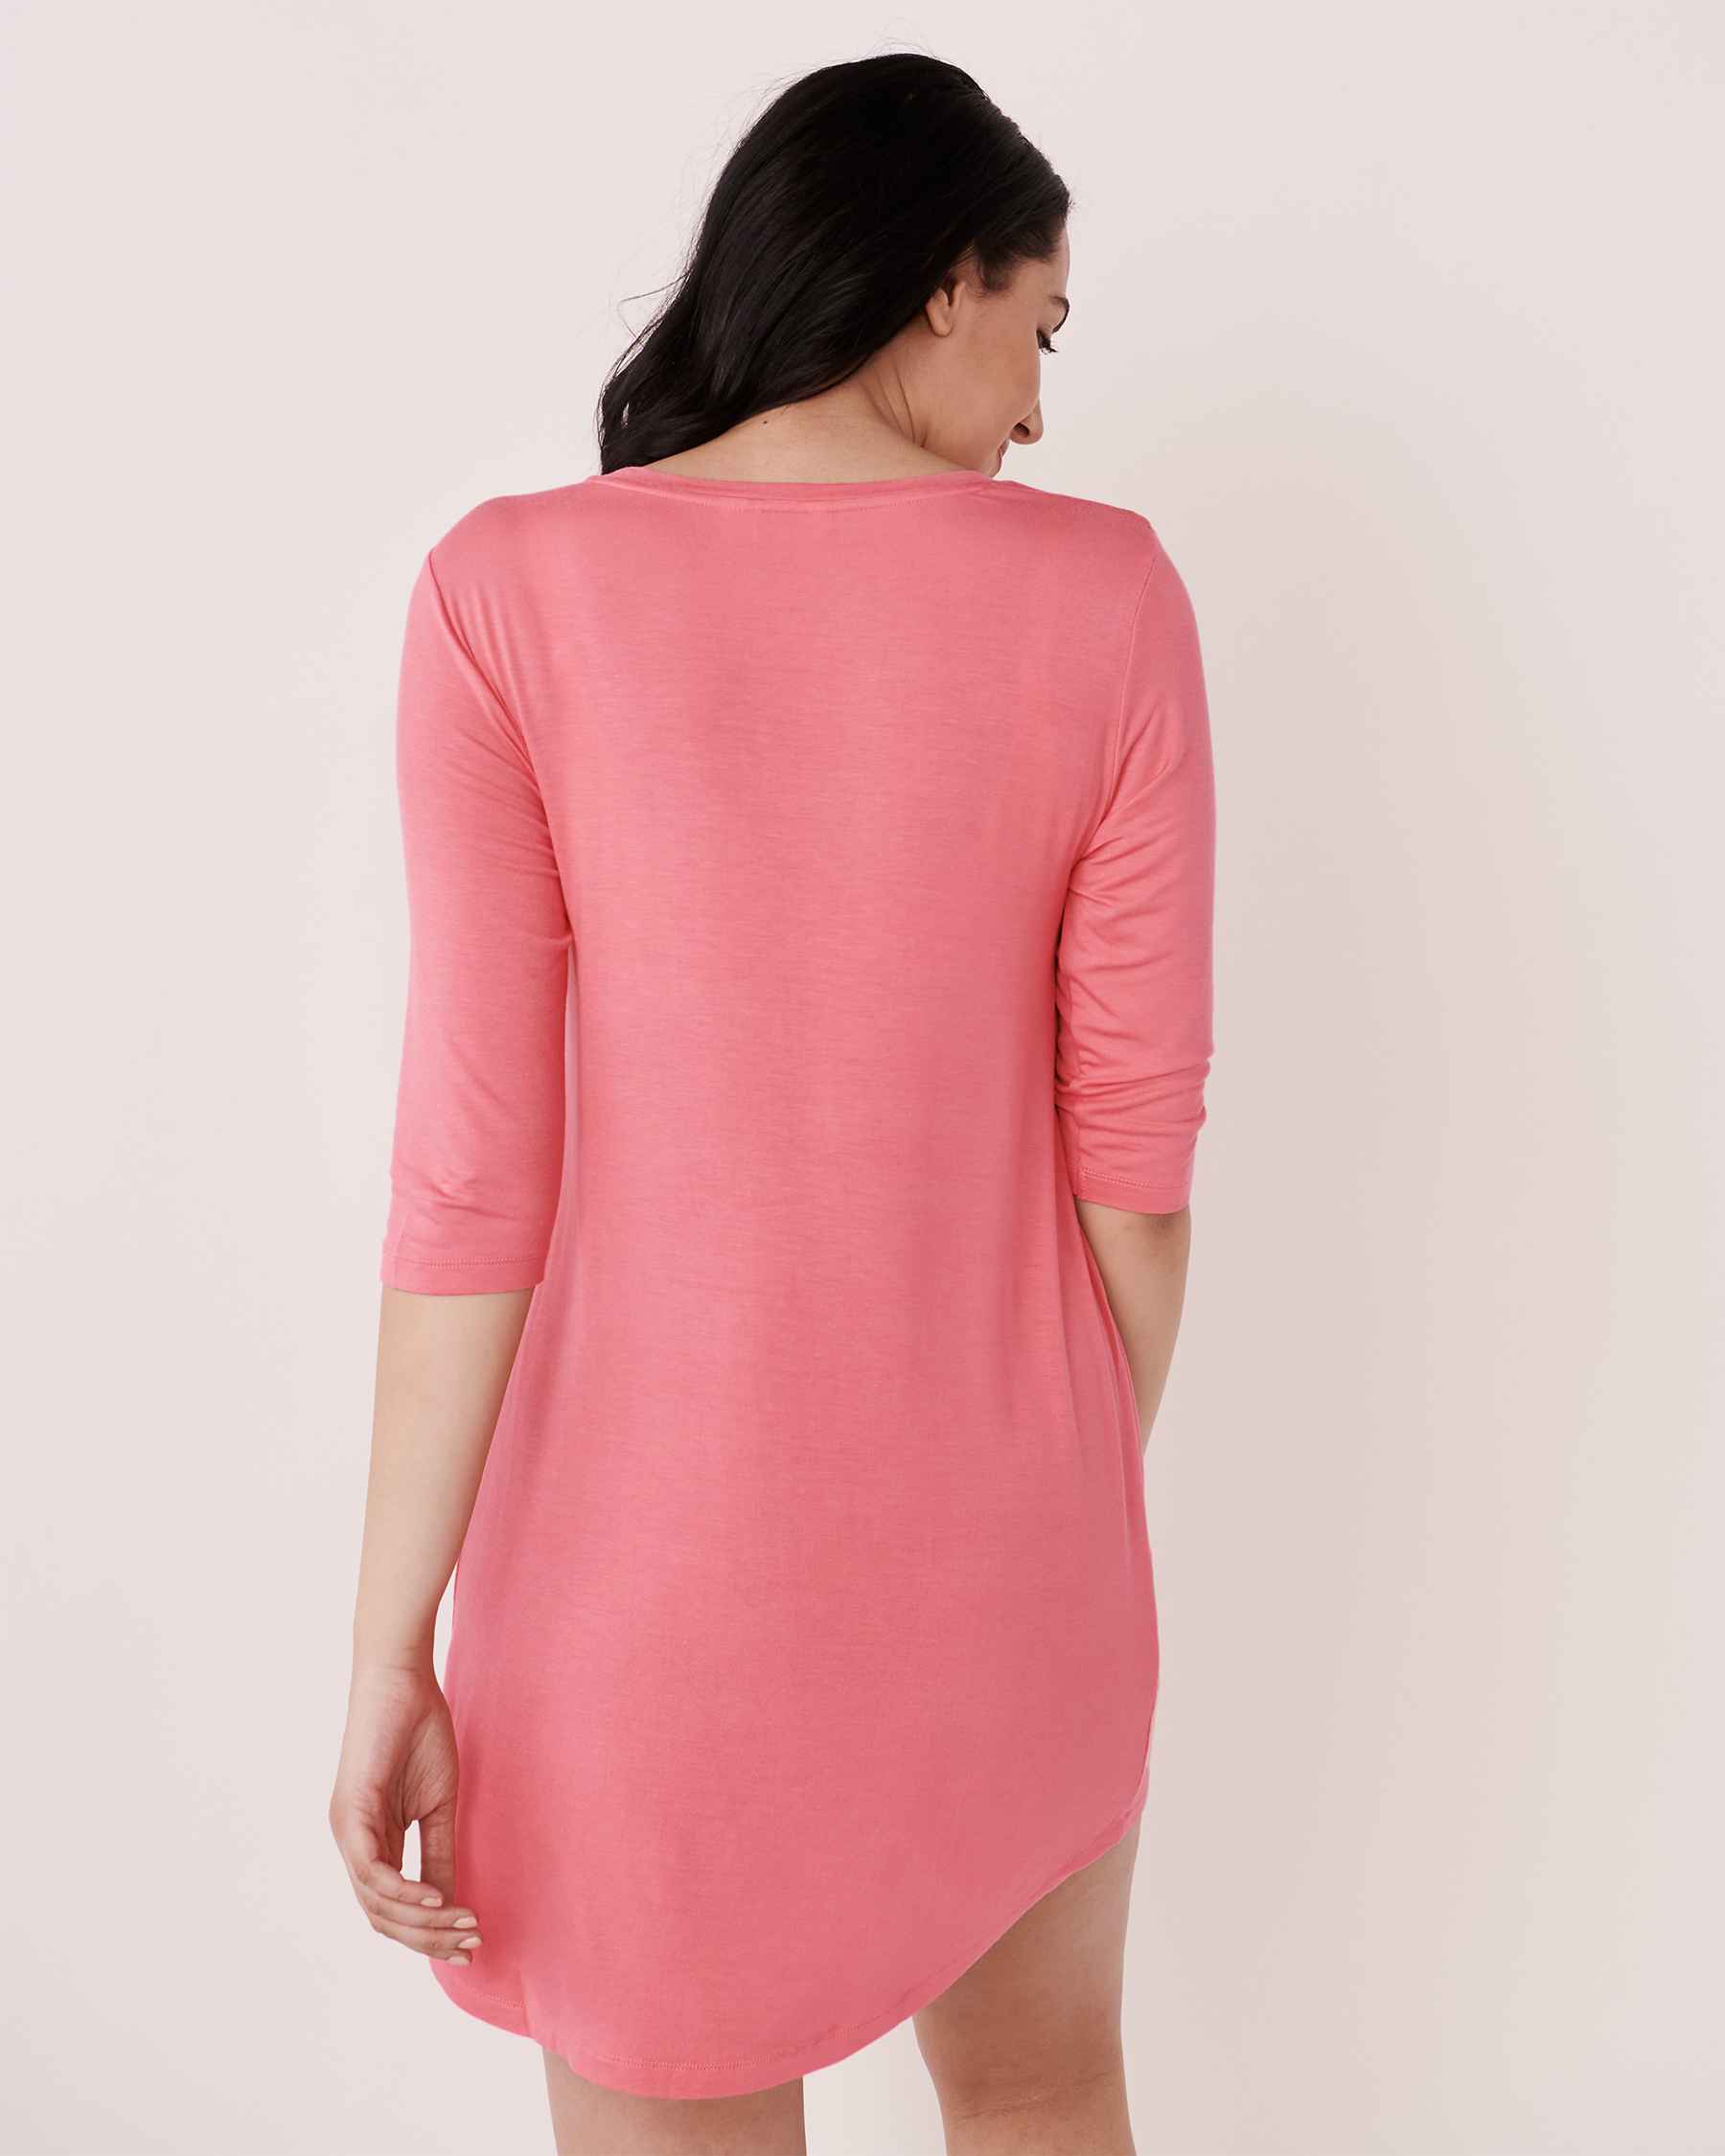 LA VIE EN ROSE Soft Knit Jersey 3/4 Sleeve Sleepshirt Flamingo pink 40500187 - View2